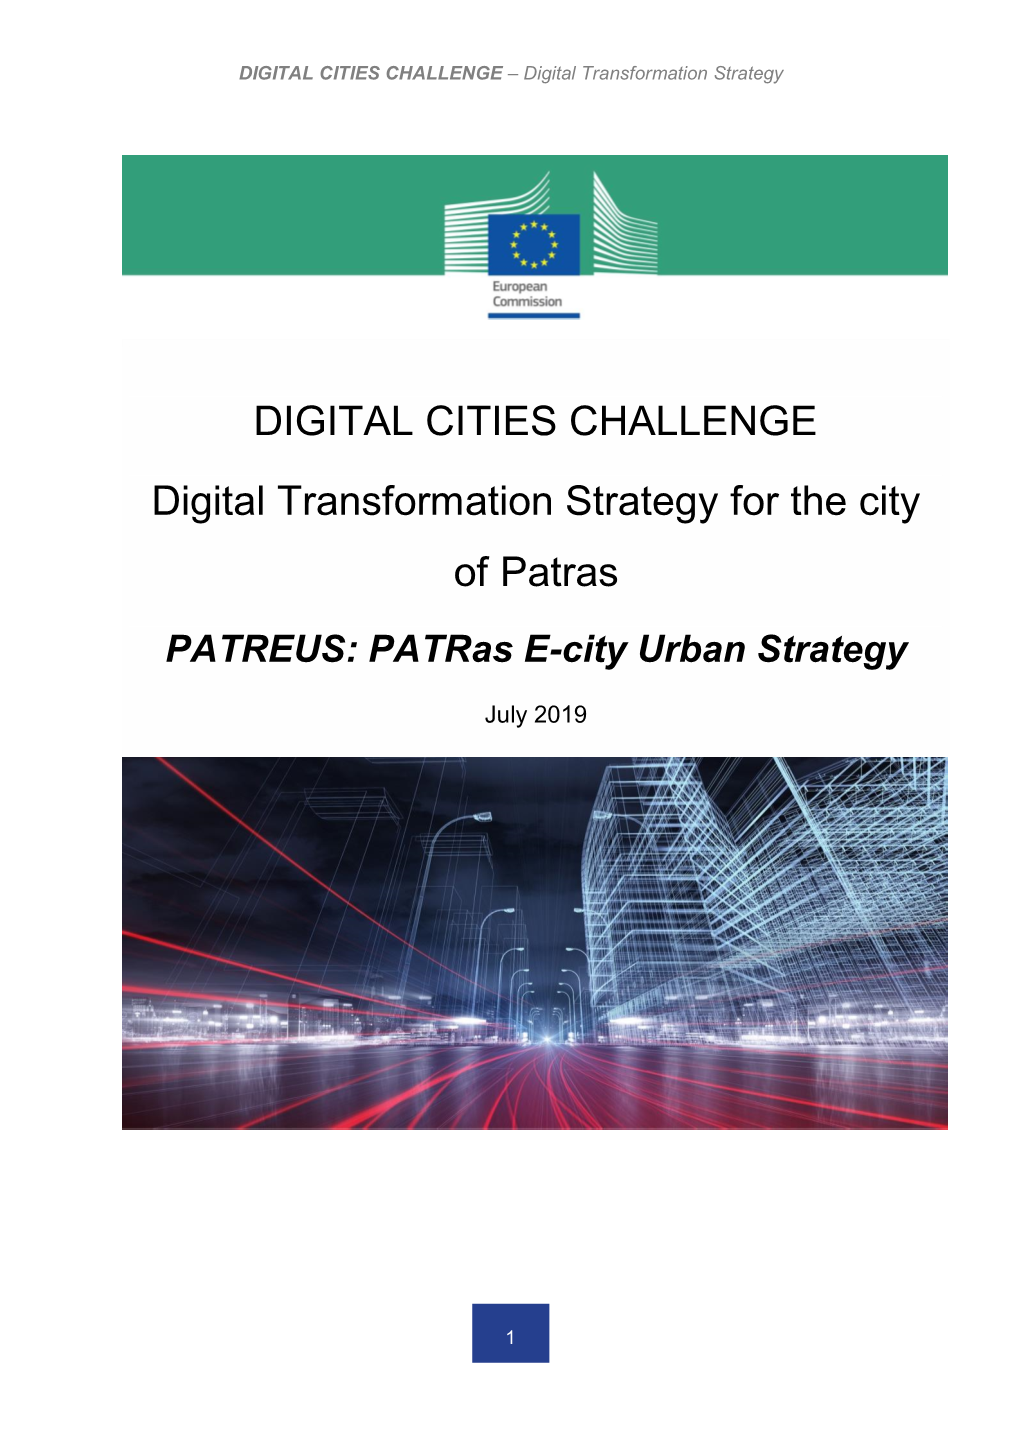 DIGITAL CITIES CHALLENGE Digital Transformation Strategy for the City of Patras PATREUS: Patras E-City Urban Strategy